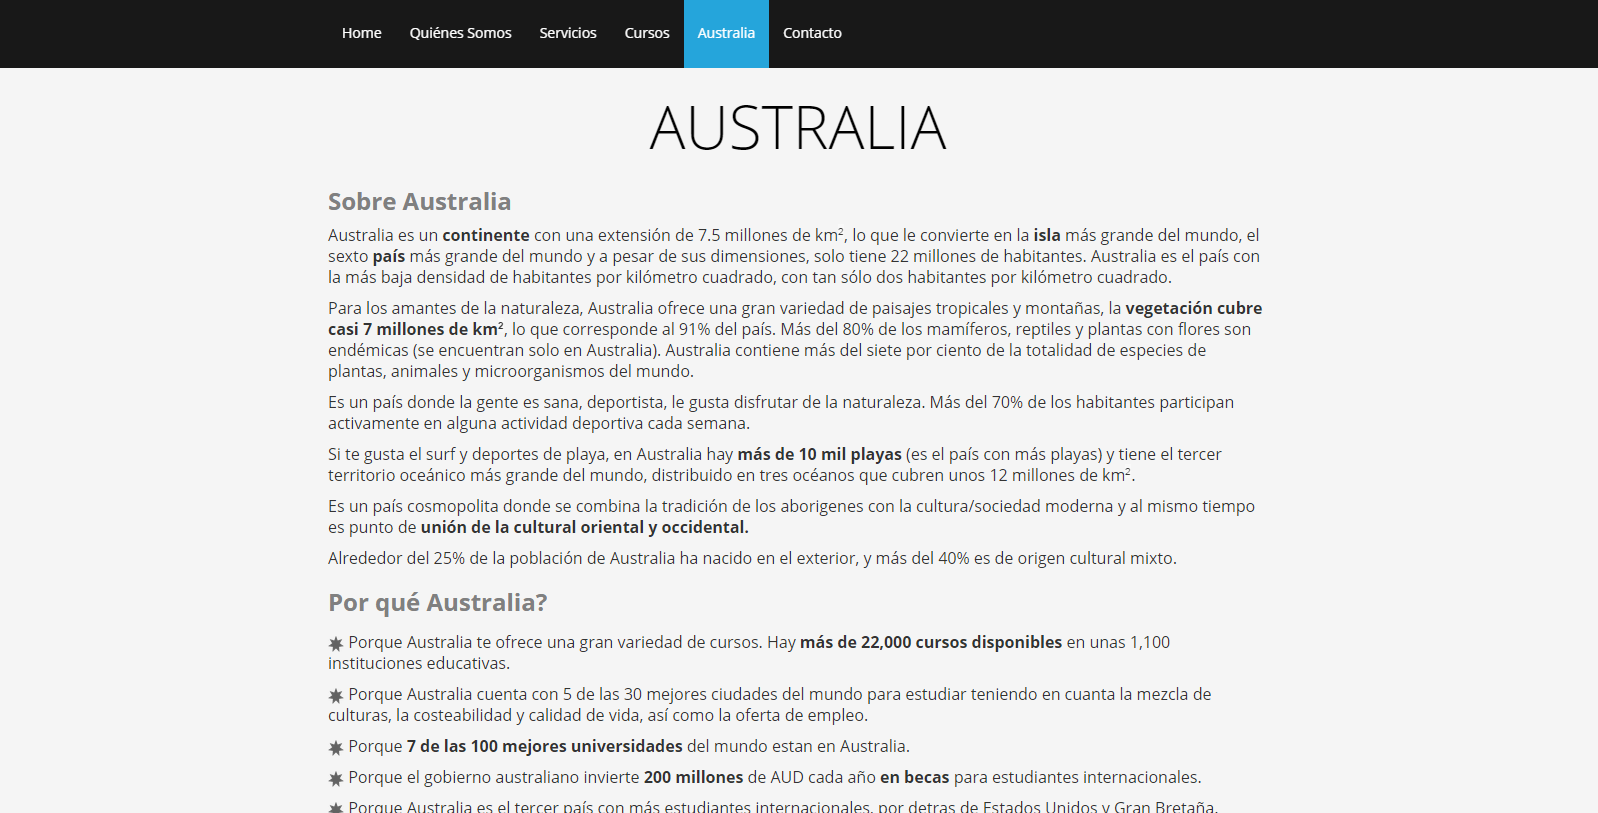 Rumbo Australia's Information about Australia